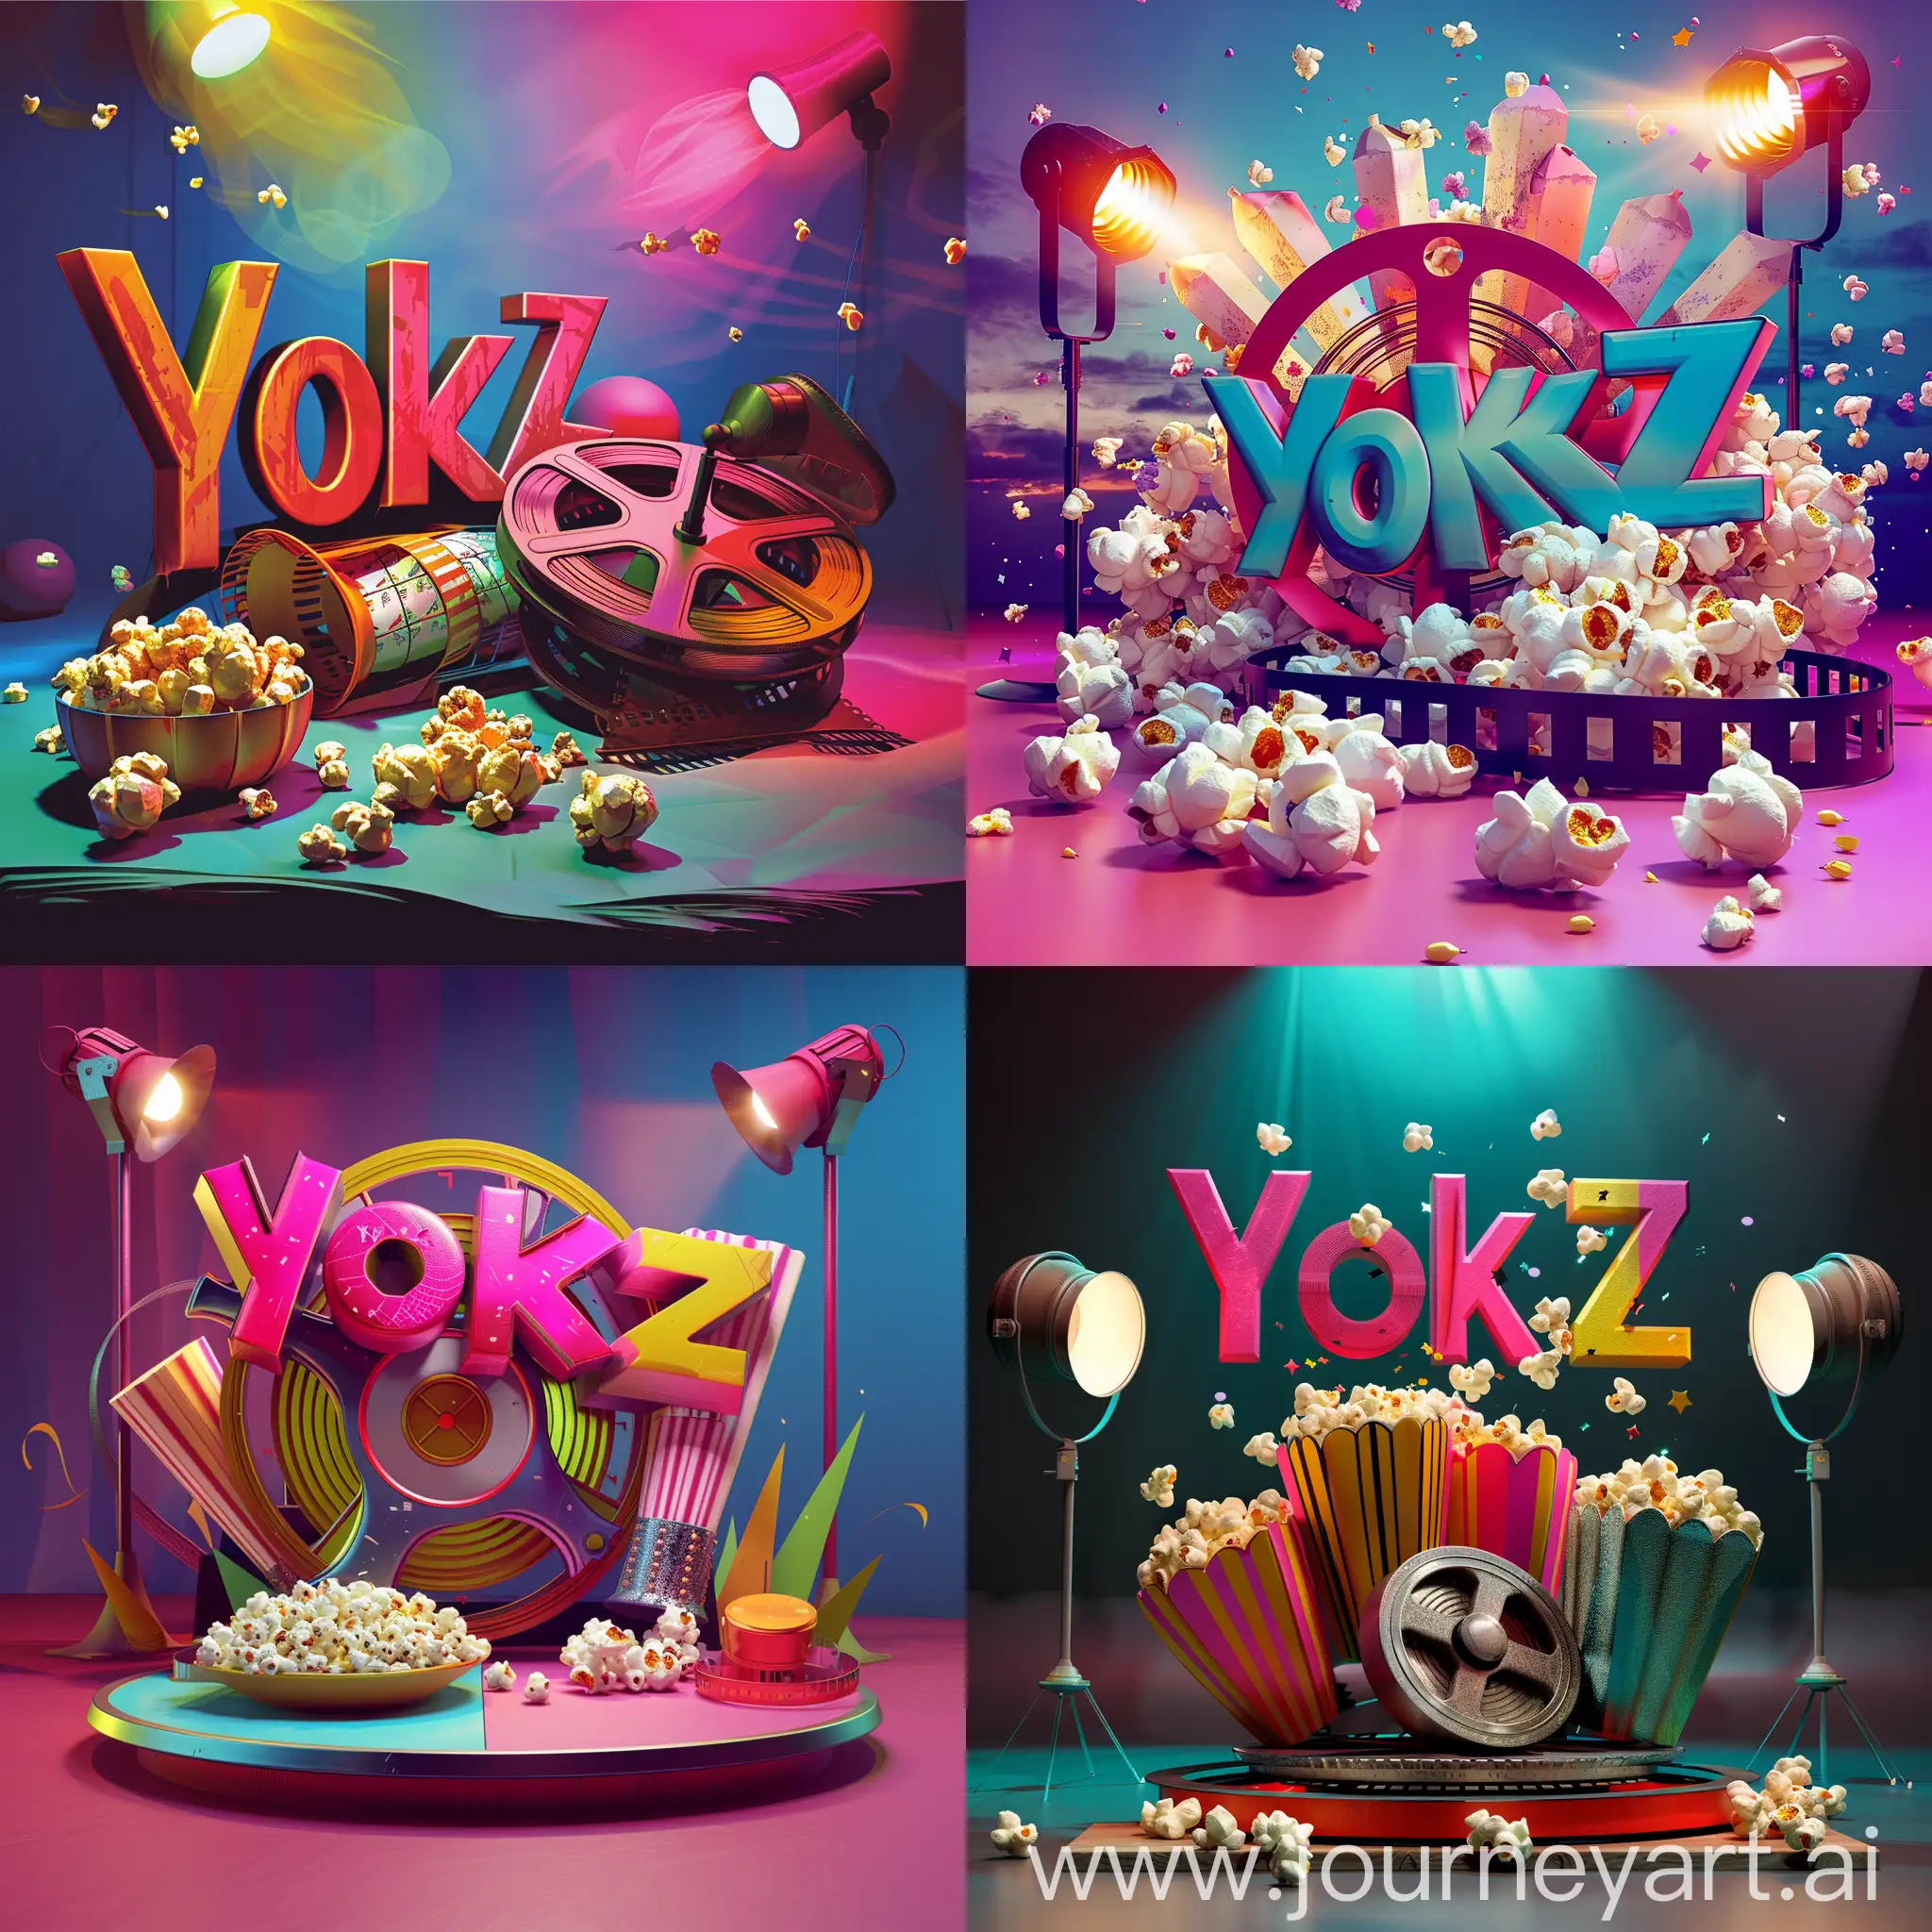 Create 'Yokz Screening' profile pic: bold 'Yokz', film reel motif, vibrant colors, 4K, popcorn, spotlight. Make it pop